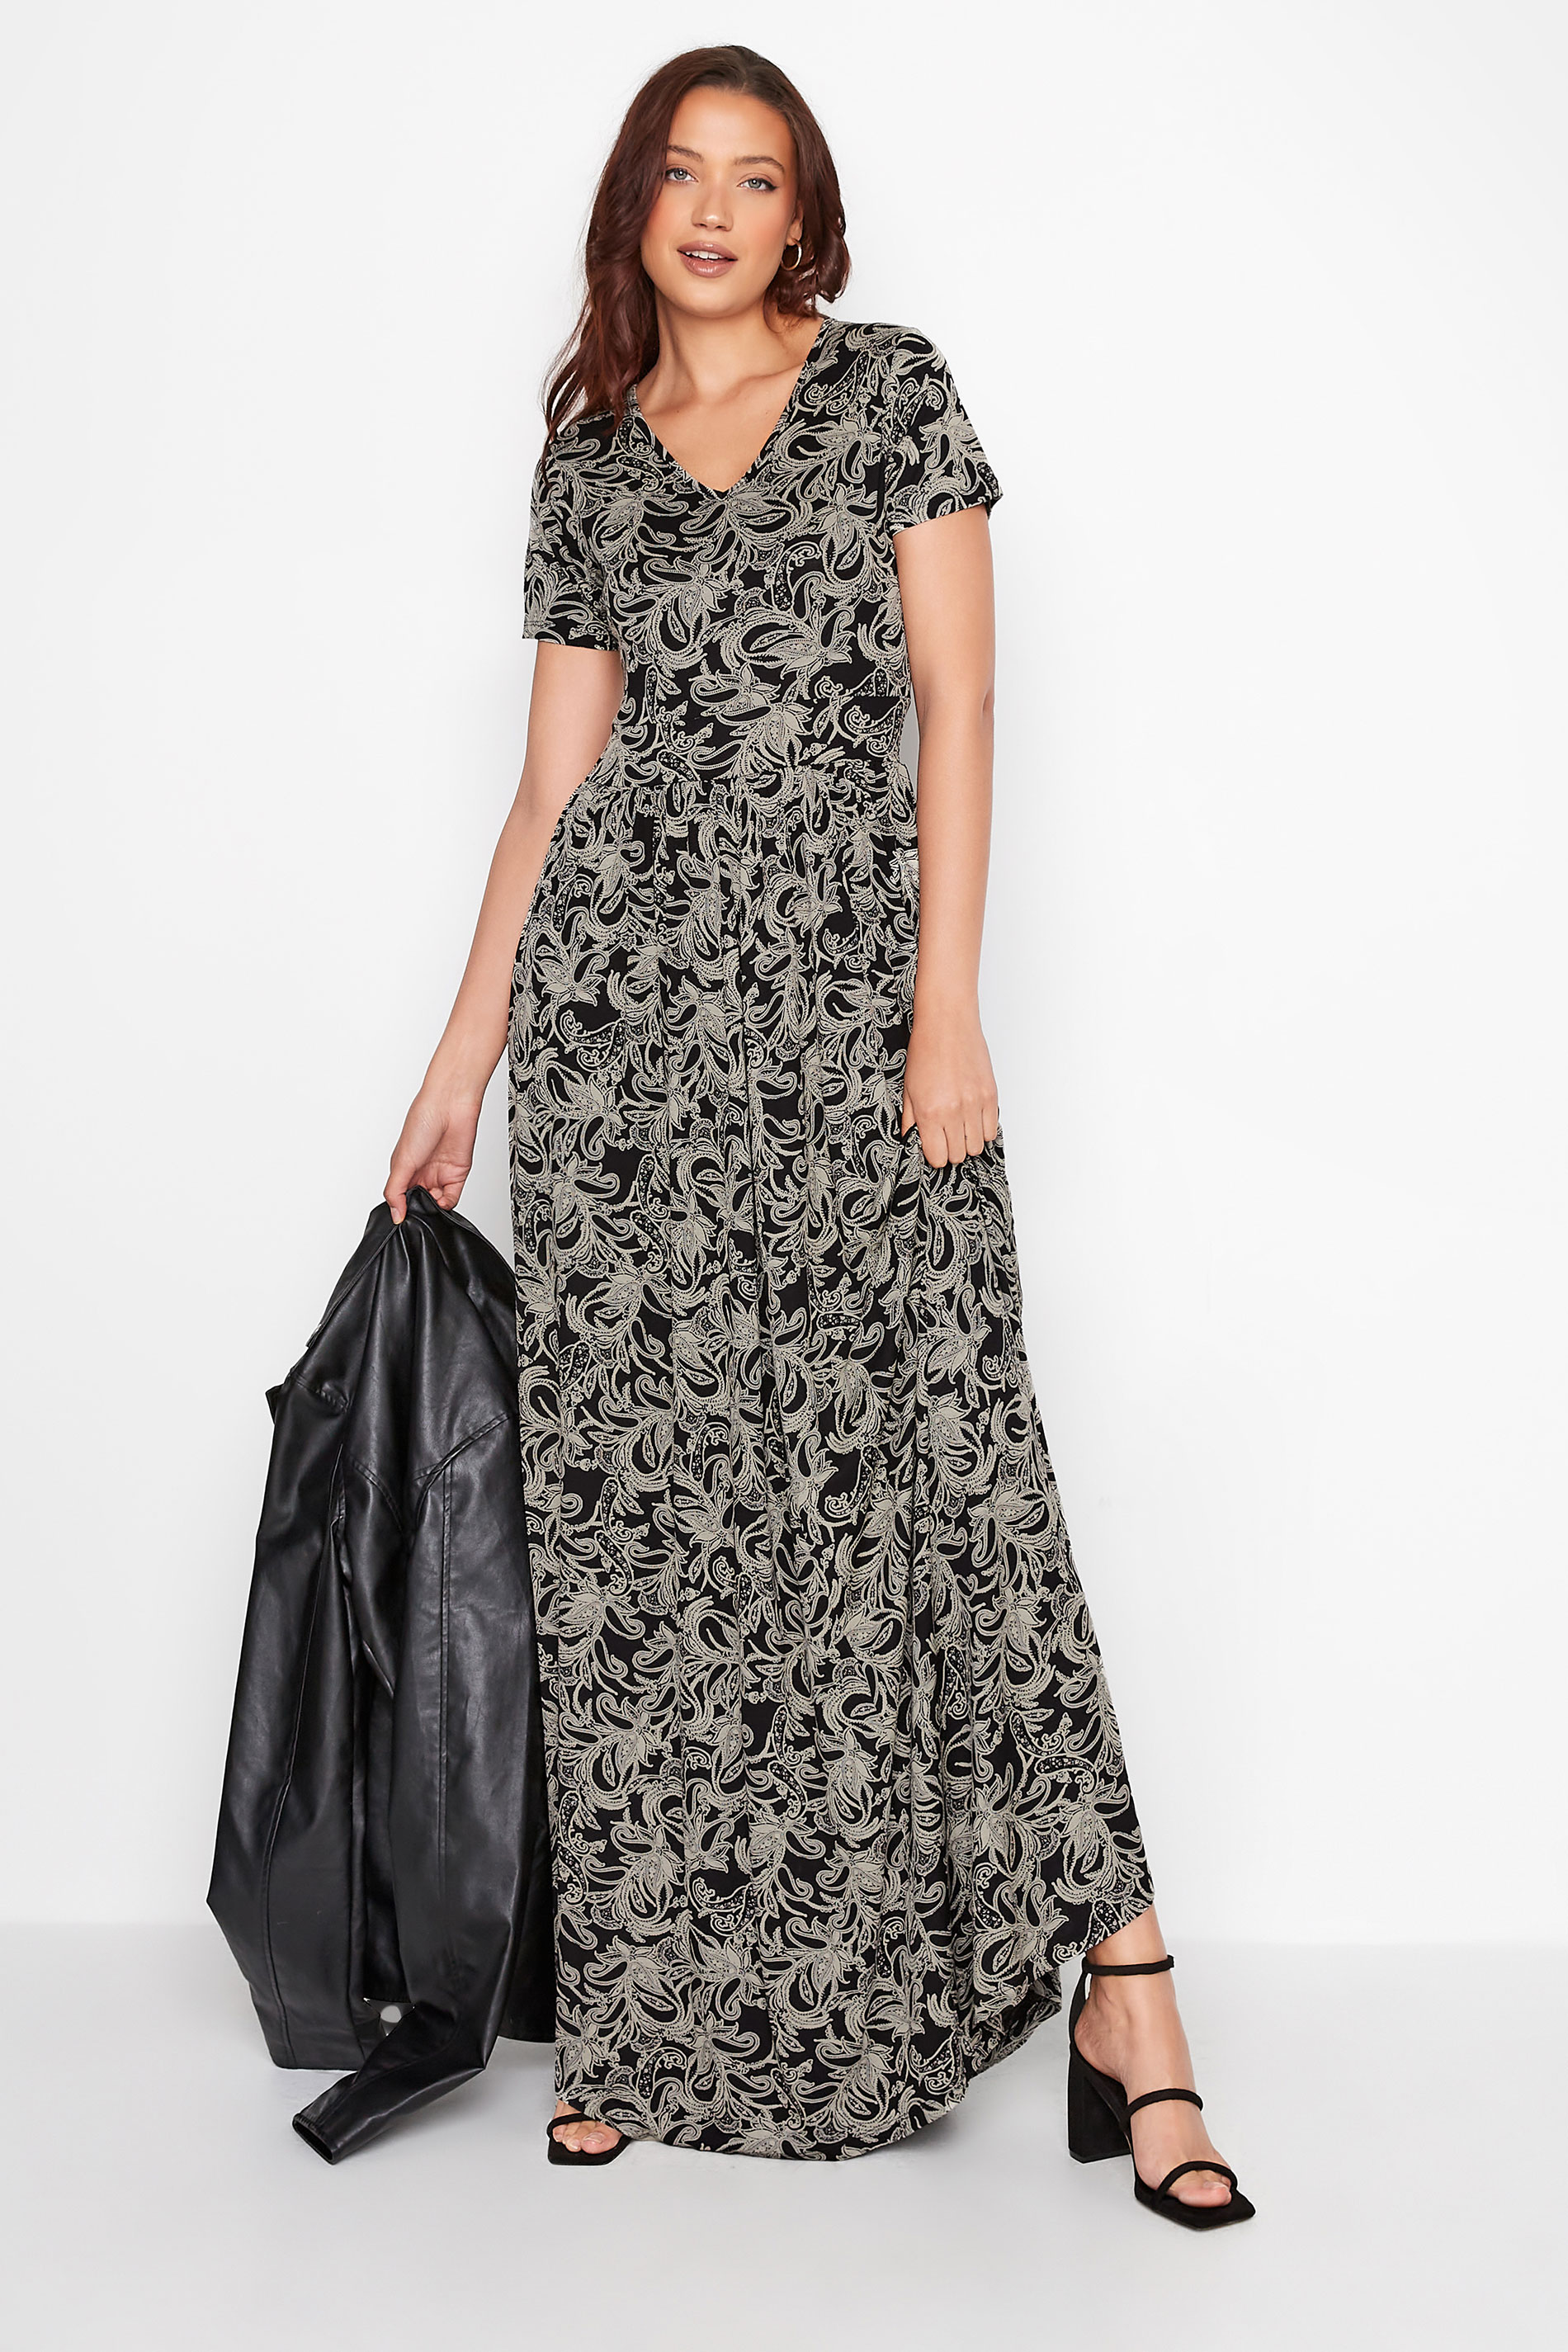 LTS Tall Women's Black Paisley Print Maxi Dress | Long Tall Sally 1